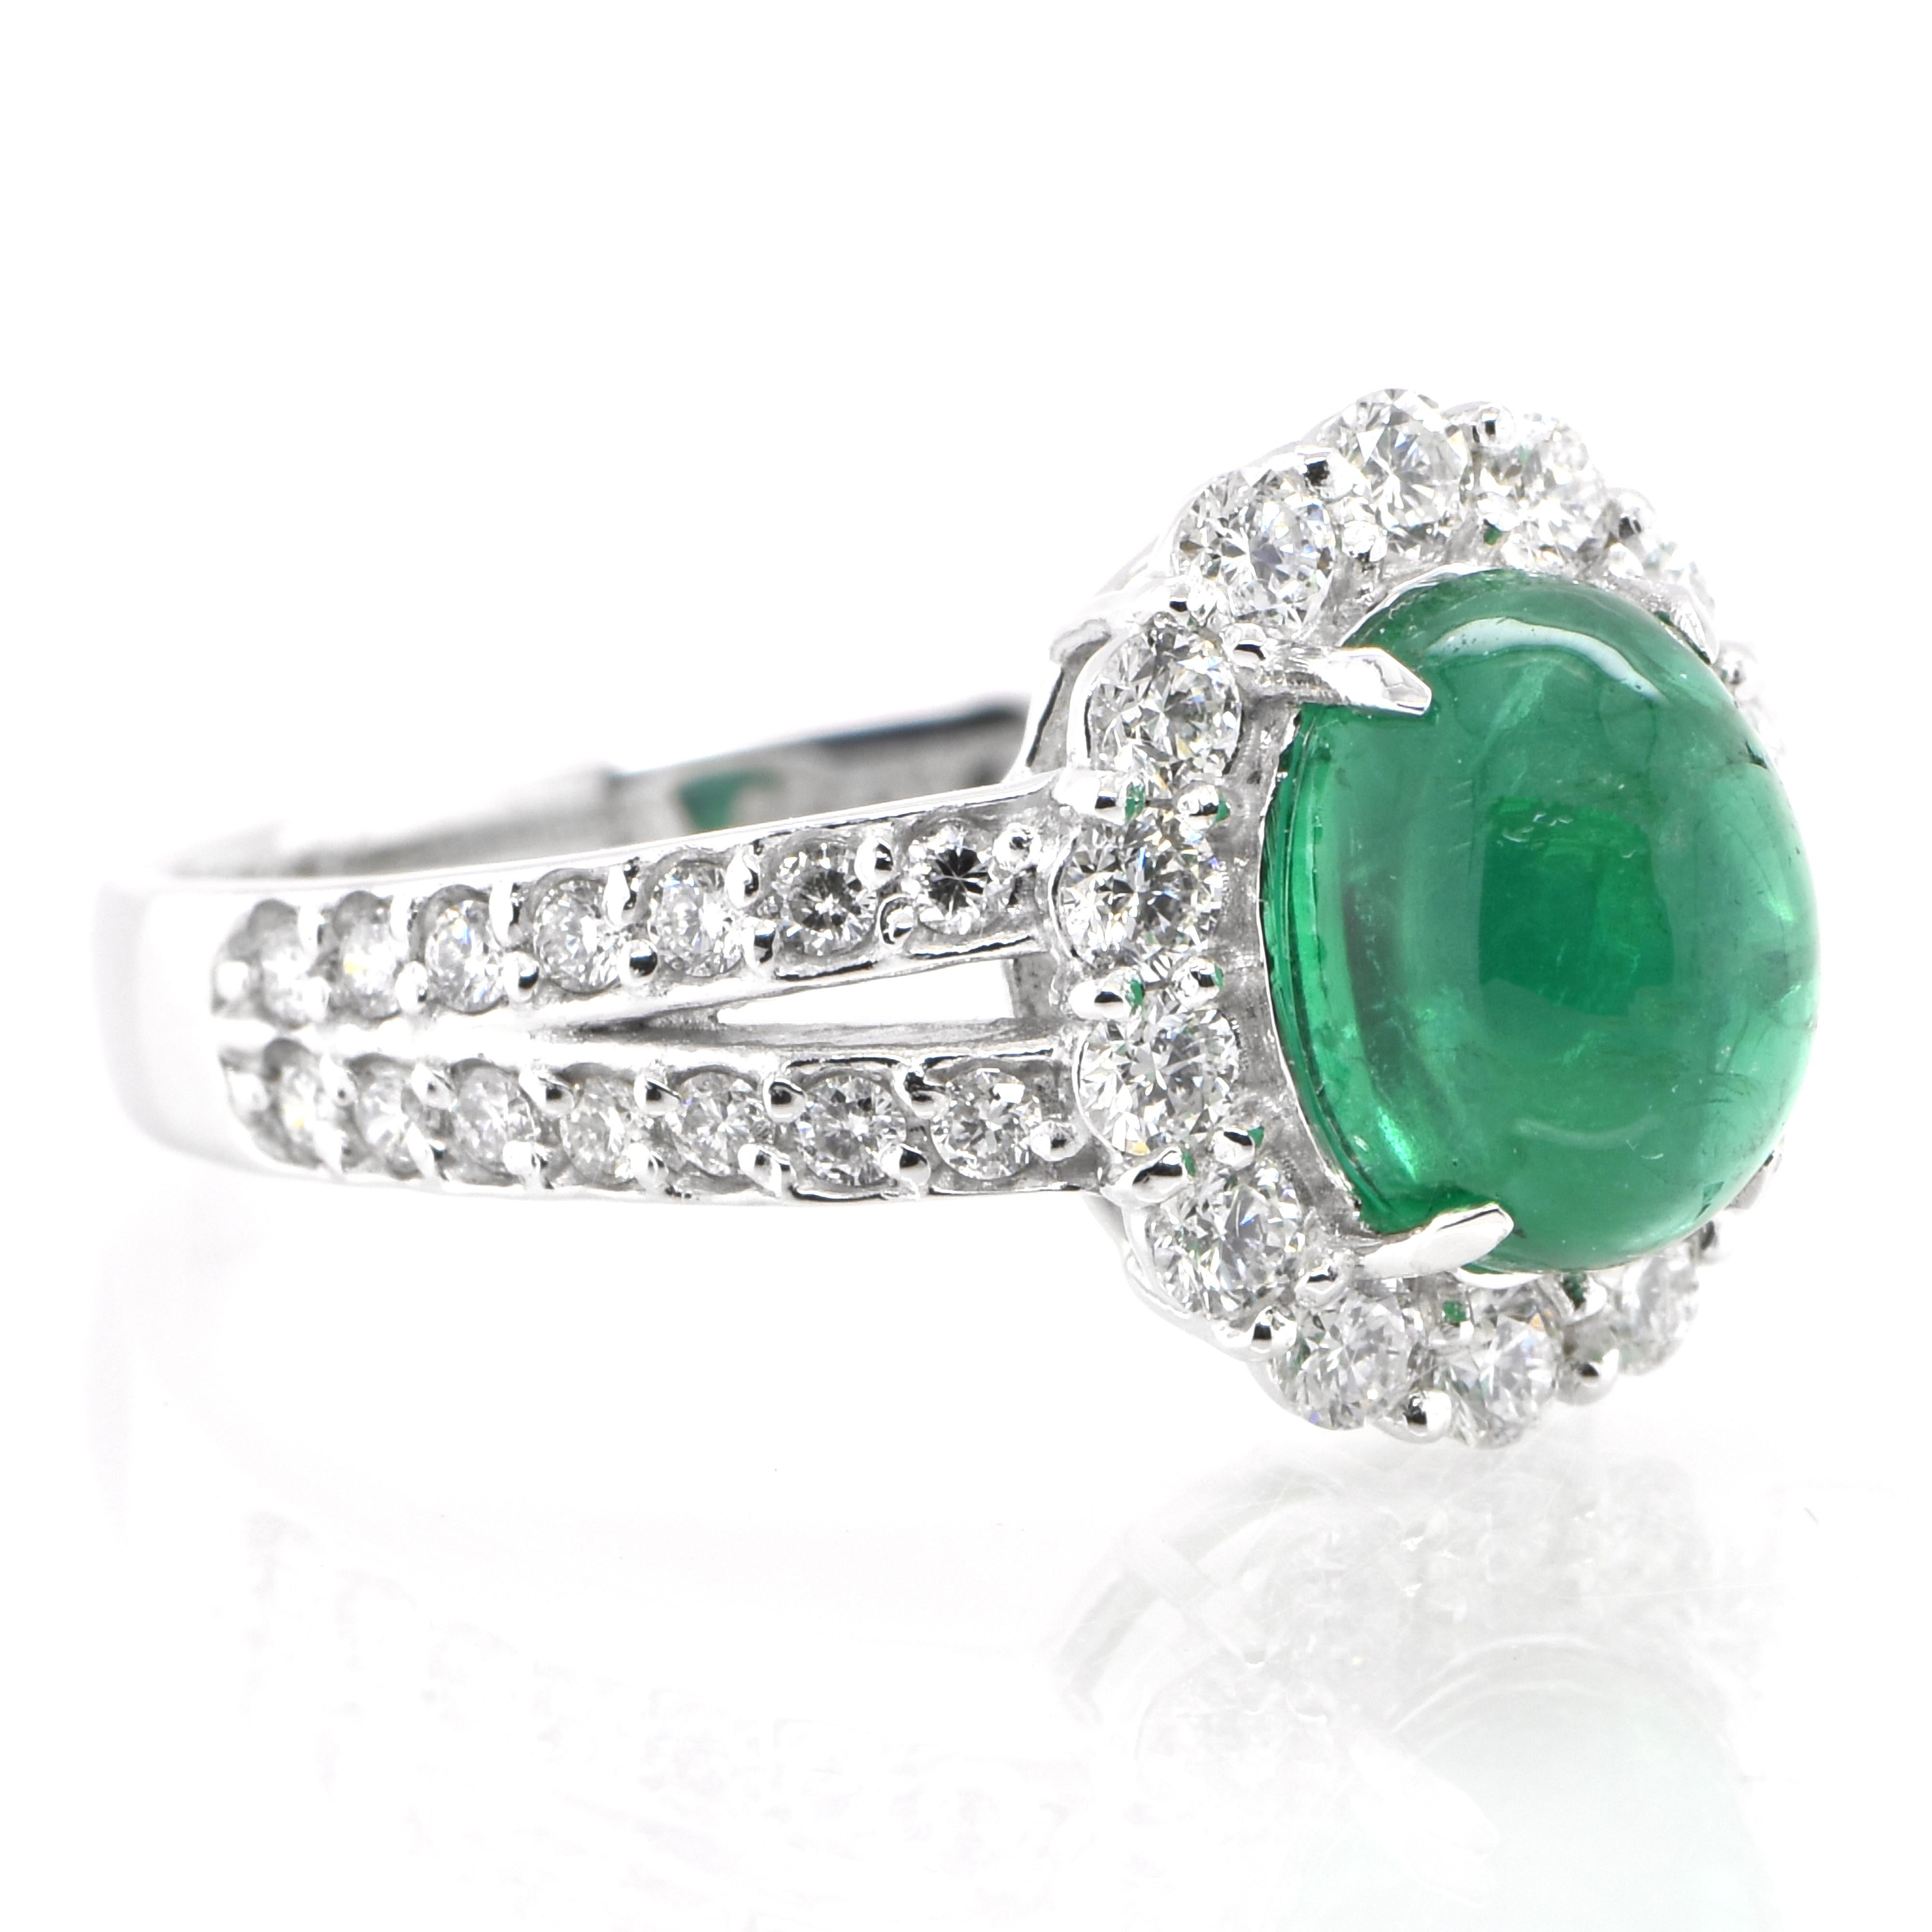 Modern 2.07 Carat Natural Emerald Cabochon and Diamond Ring Set in Platinum